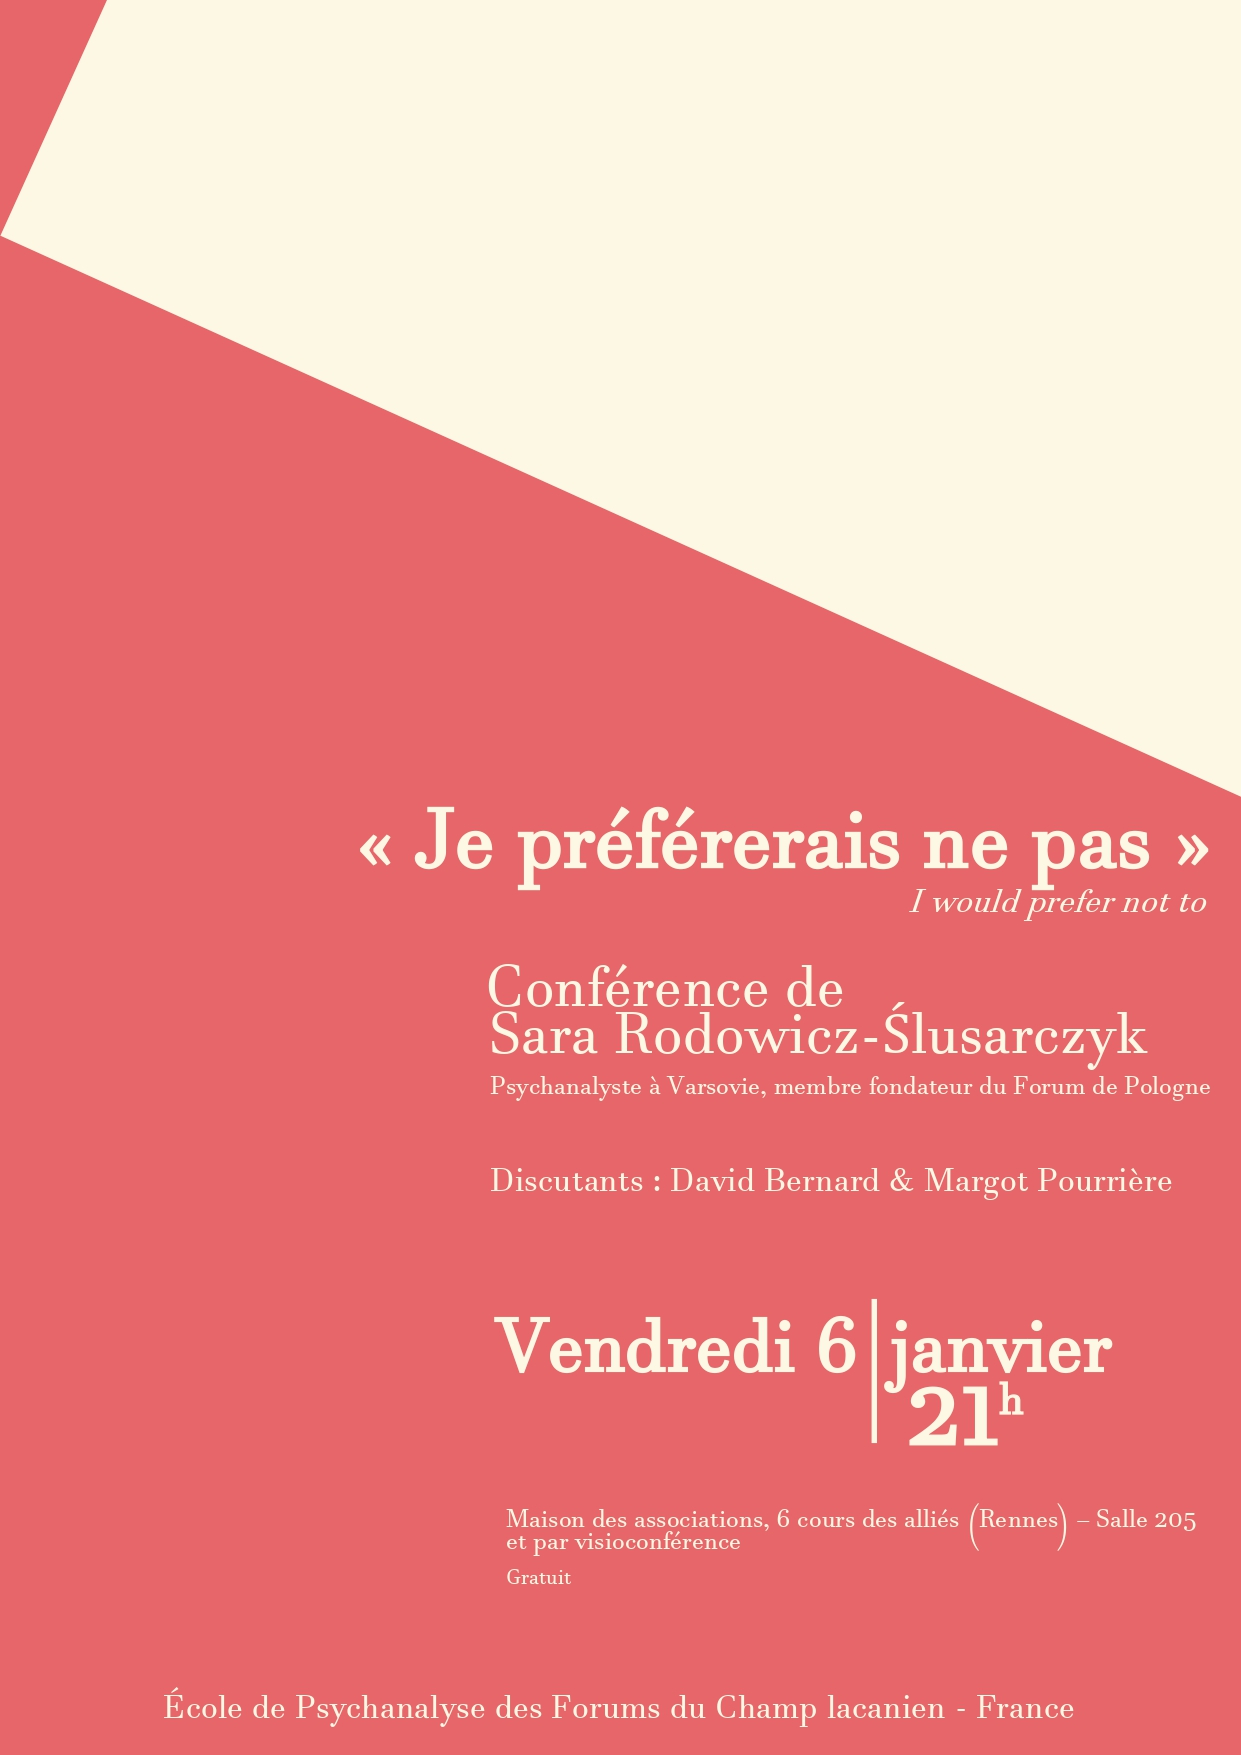 Conférence de Sara Rodowicz-Slusarczyk - "Je préférerais ne pas"